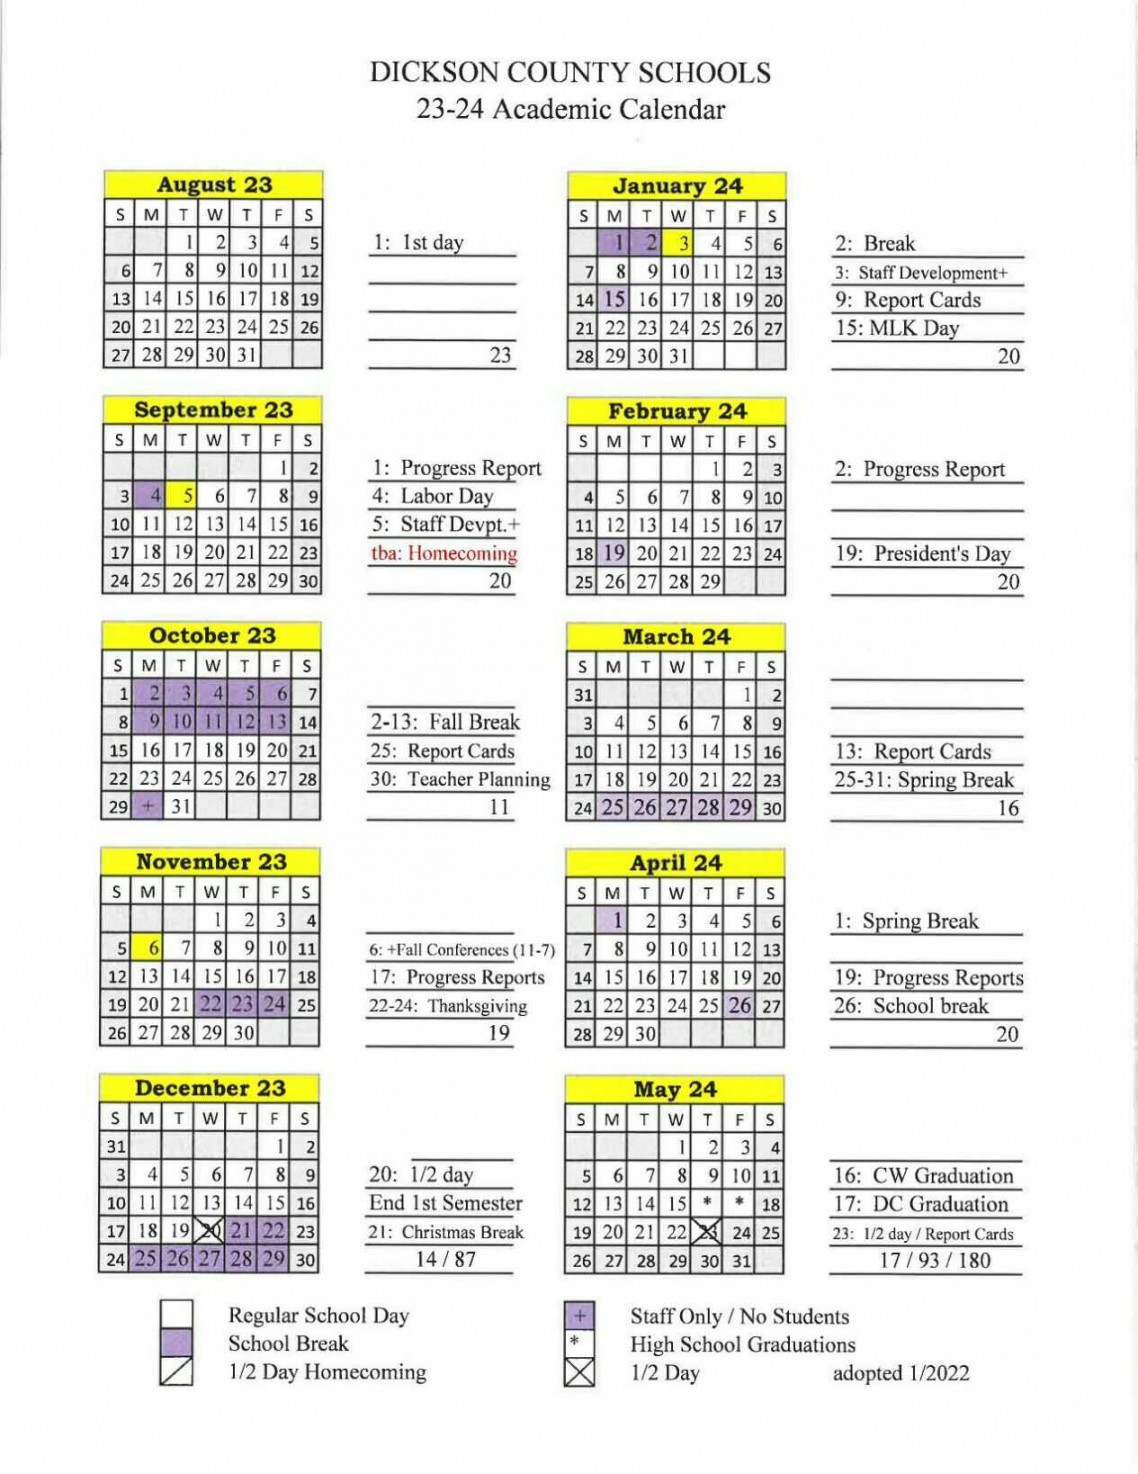 Schools release - calendar - Main Street Media of Tennessee